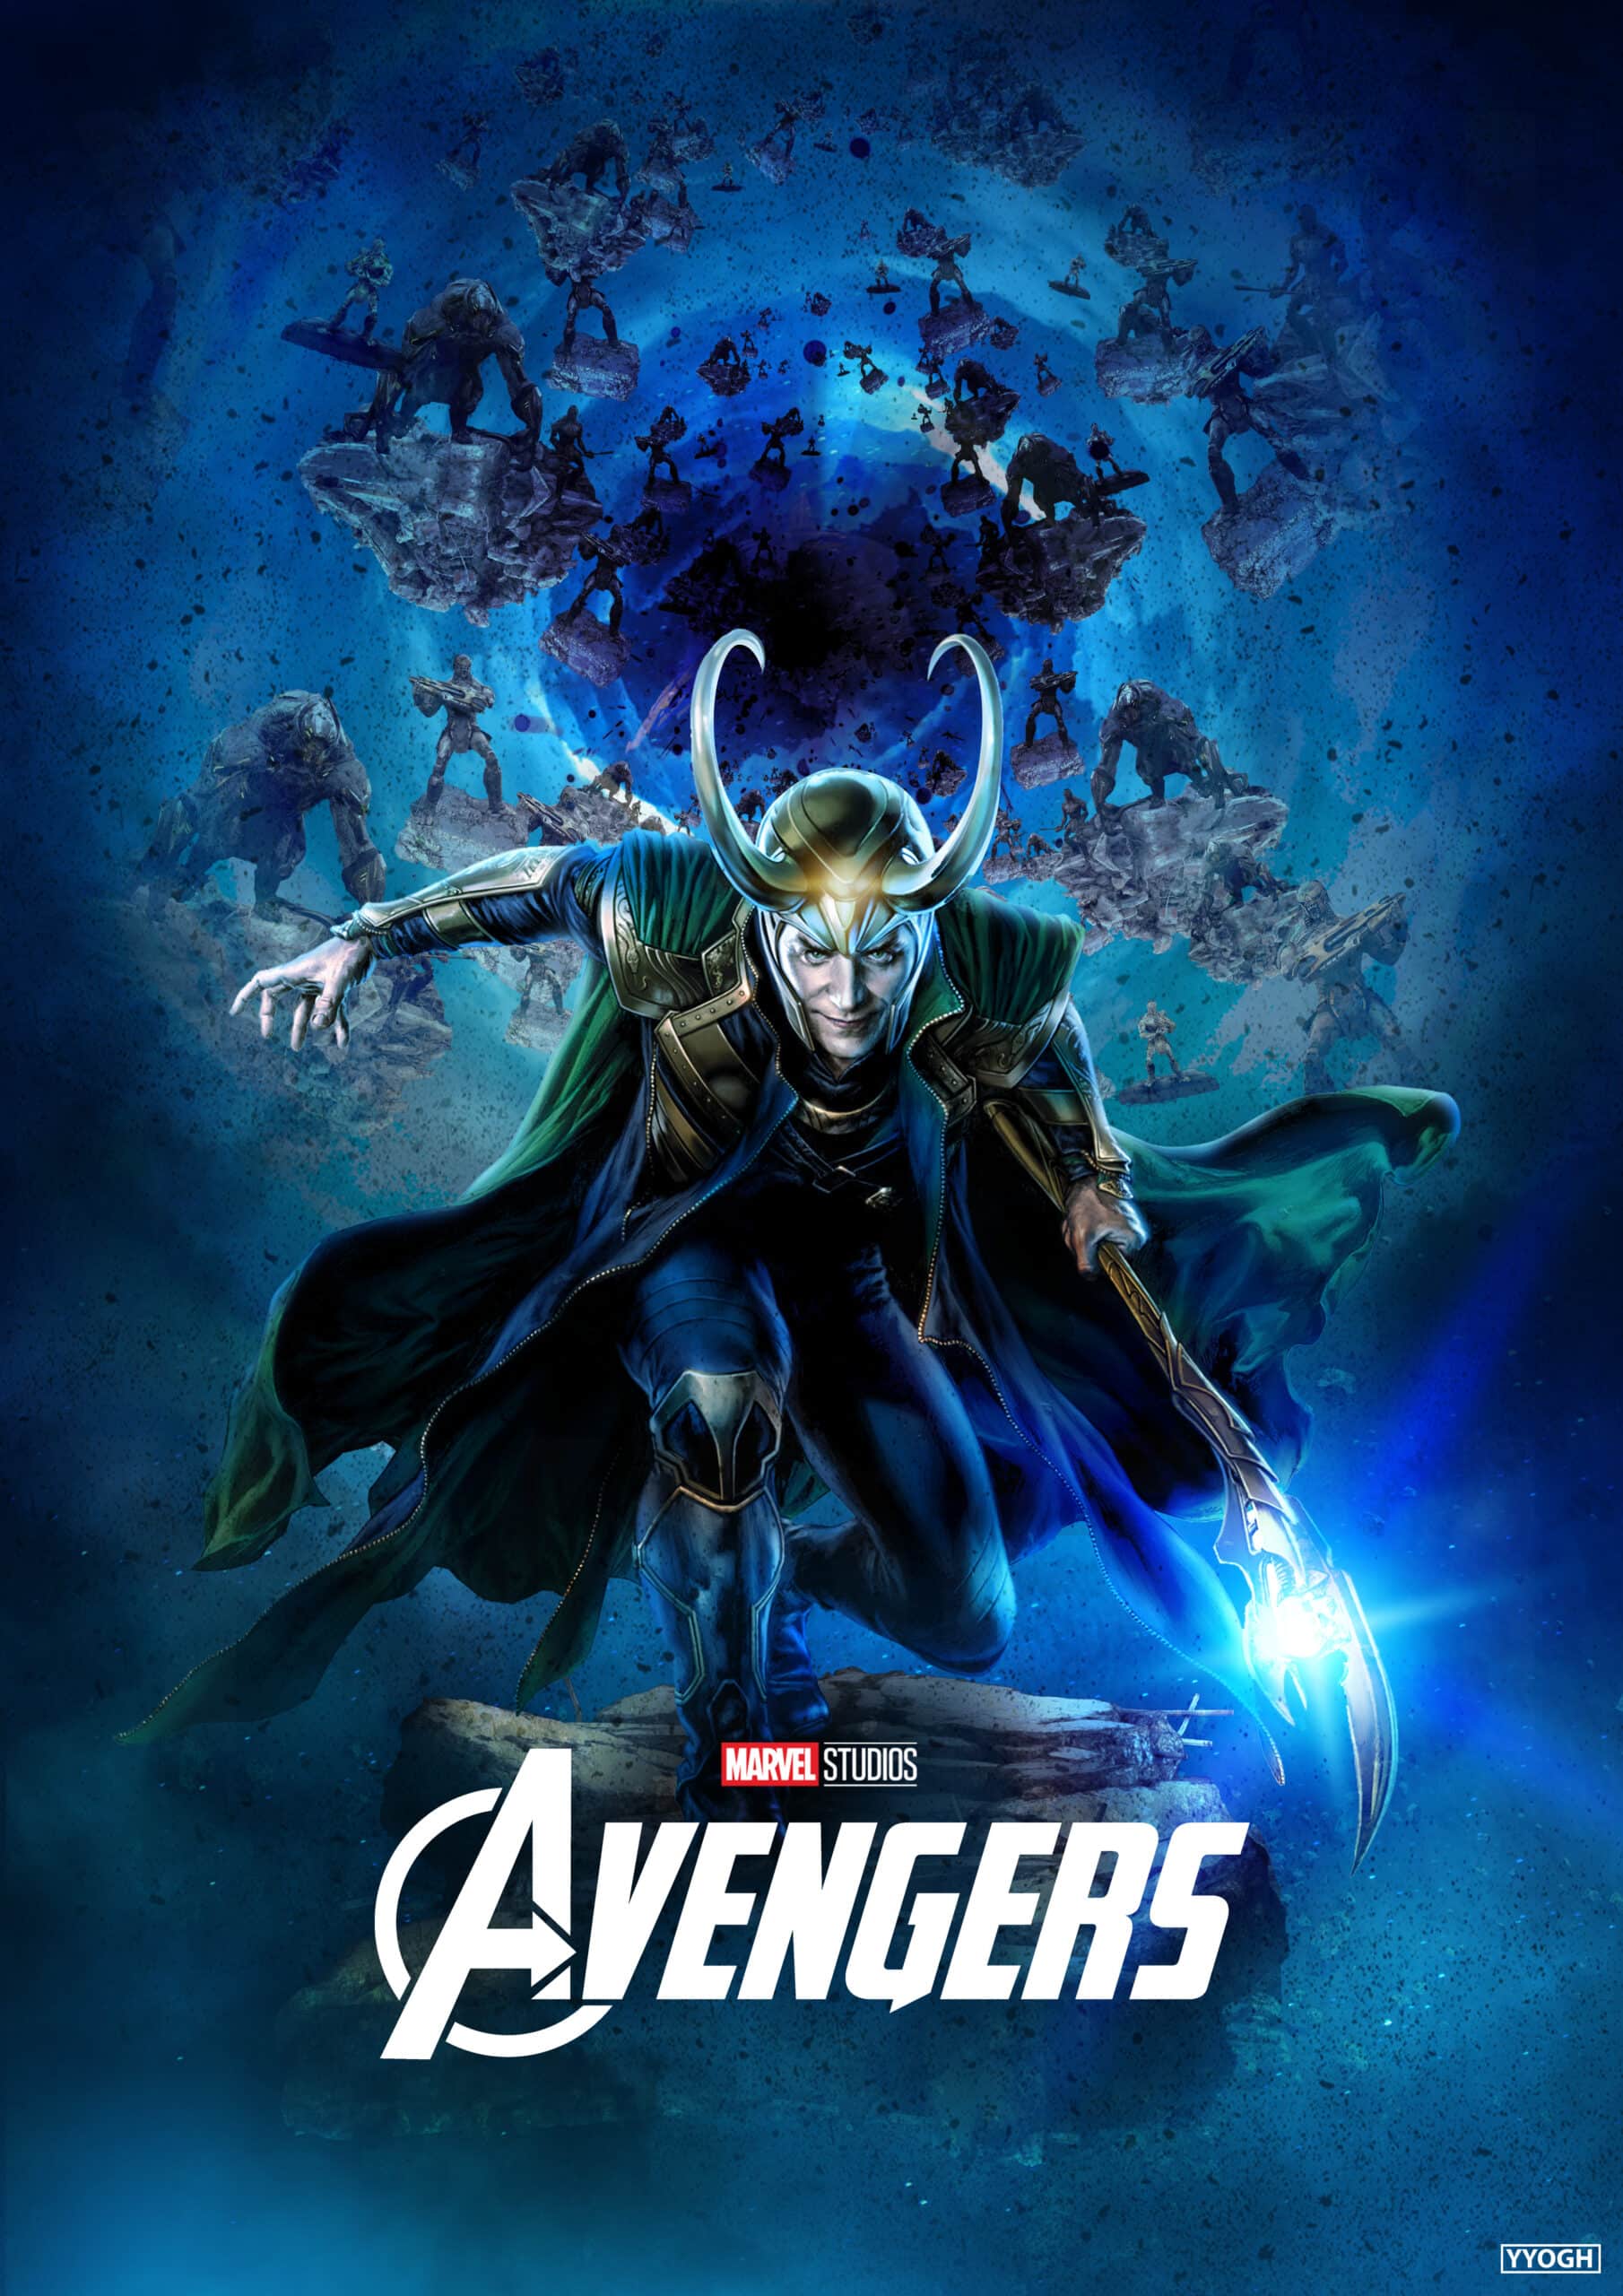 loki avengers movie poster